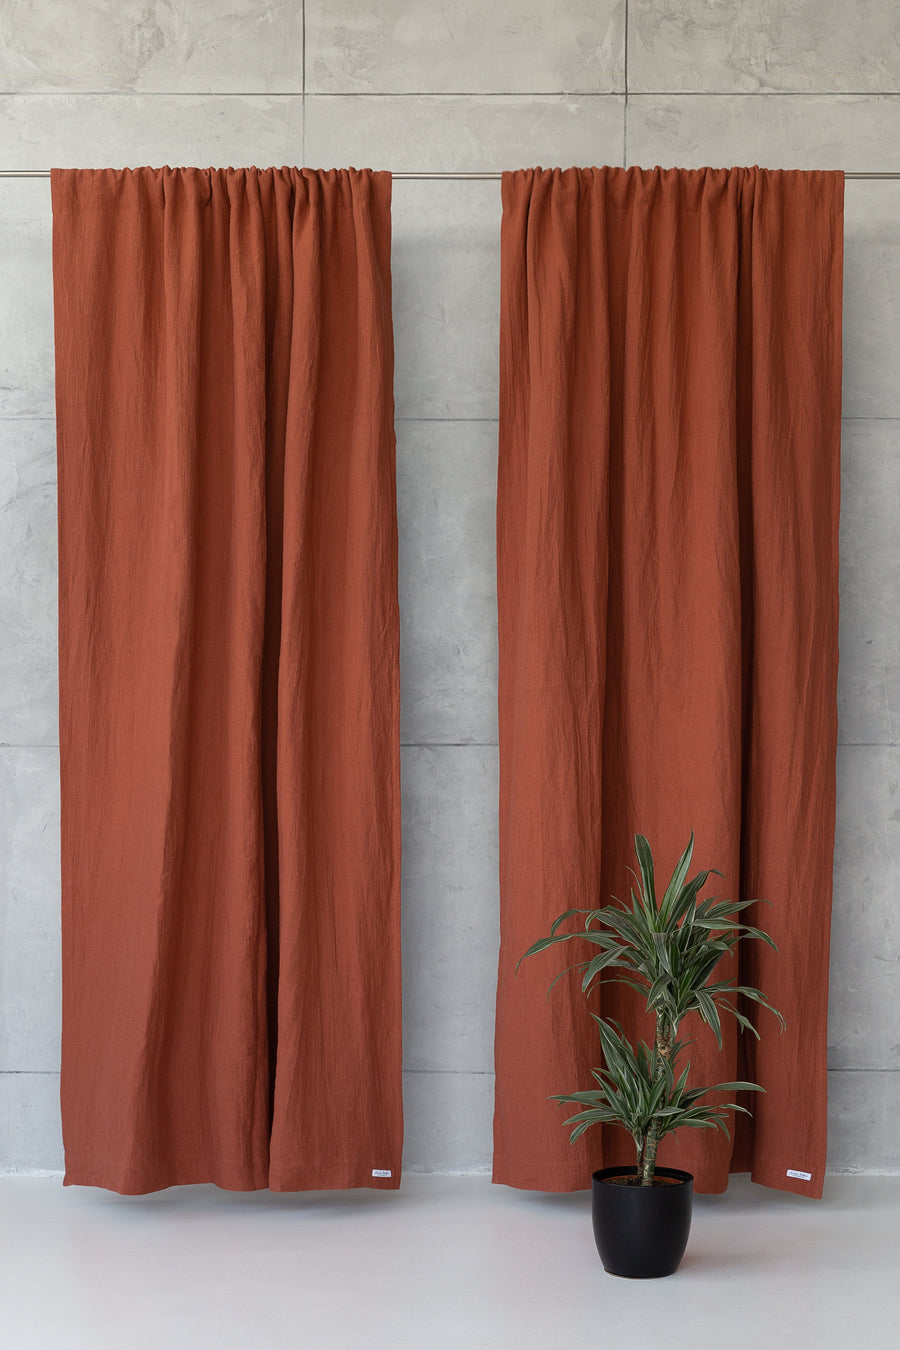 Reddish Brown linen curtain with blackout, rod pocket - Linen Couture Boutique